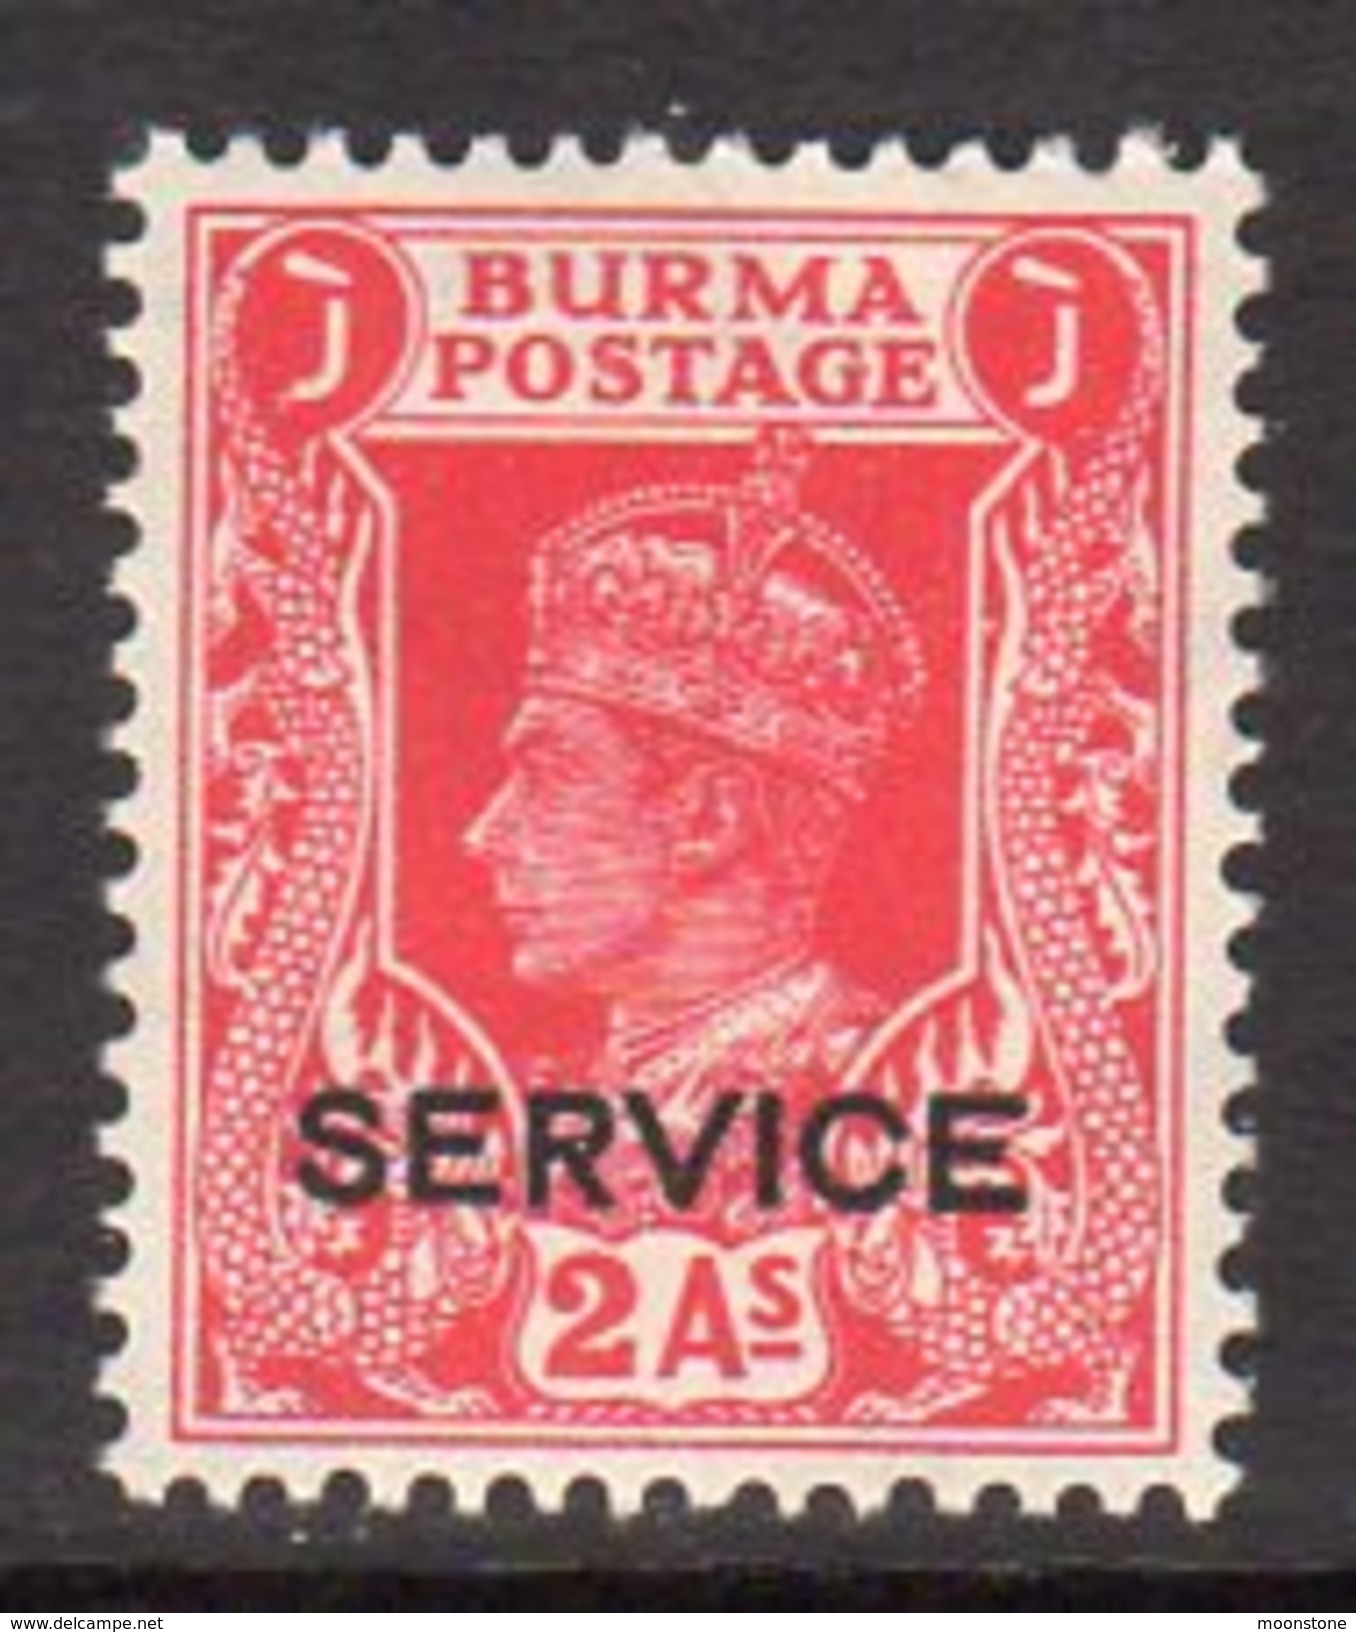 Burma GVI 1939 SERVICE 2a. Value, Very Lightly Hinged Mint, SG O20 (D) - Burma (...-1947)